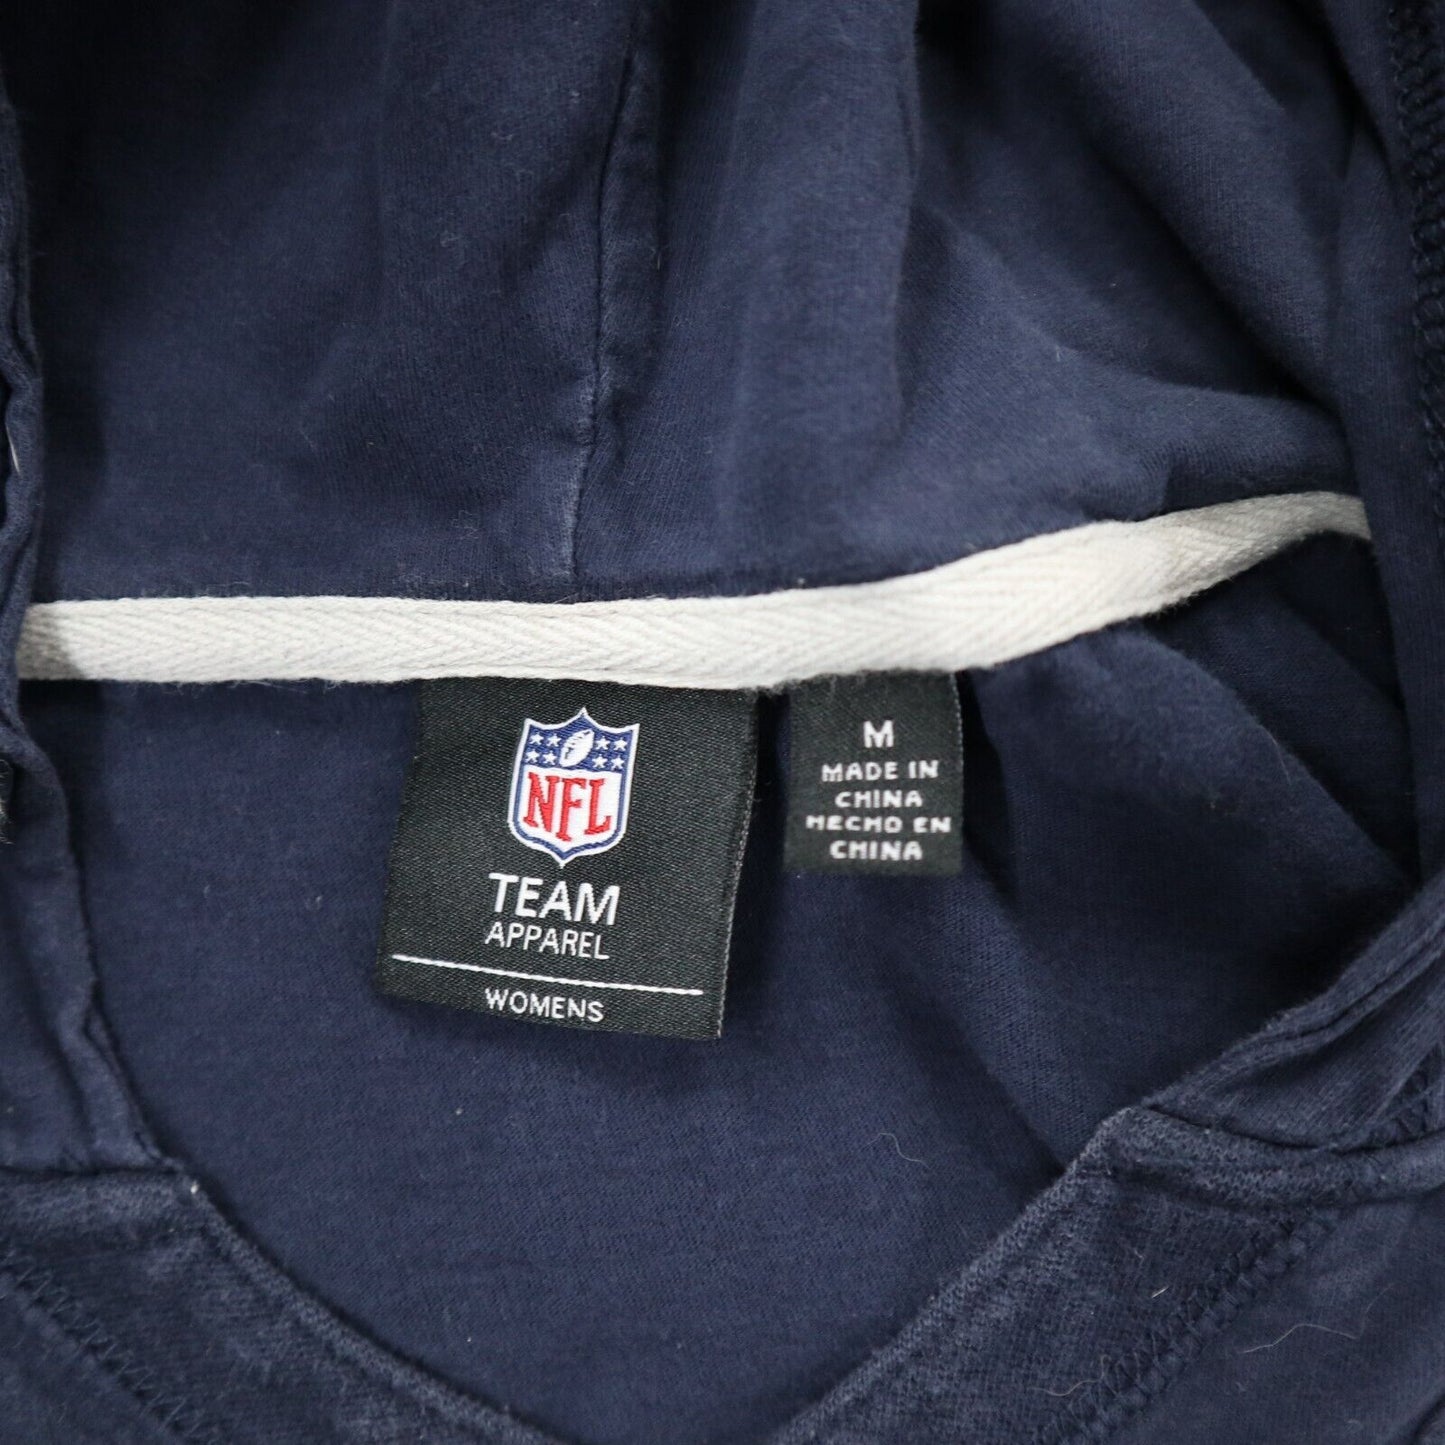 NFL Team Apparel Womens Activewear Logo Hoodies Long Sleeves Navy Blue Size M